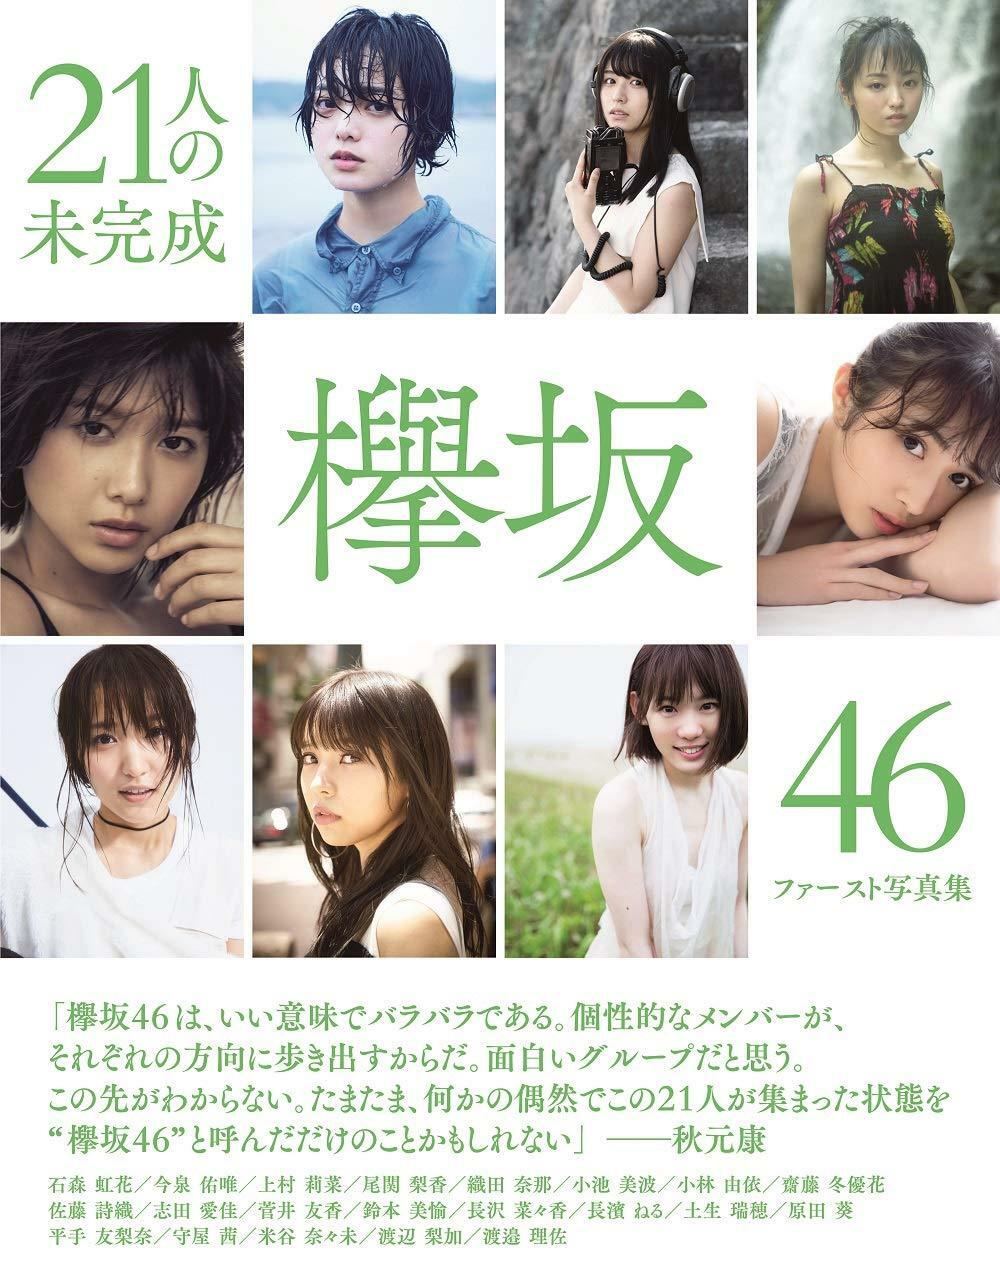 NEW Keyakizaka46 1st Photo Book | Japan Girls Idol Neru Nagahama Yurina Hirate